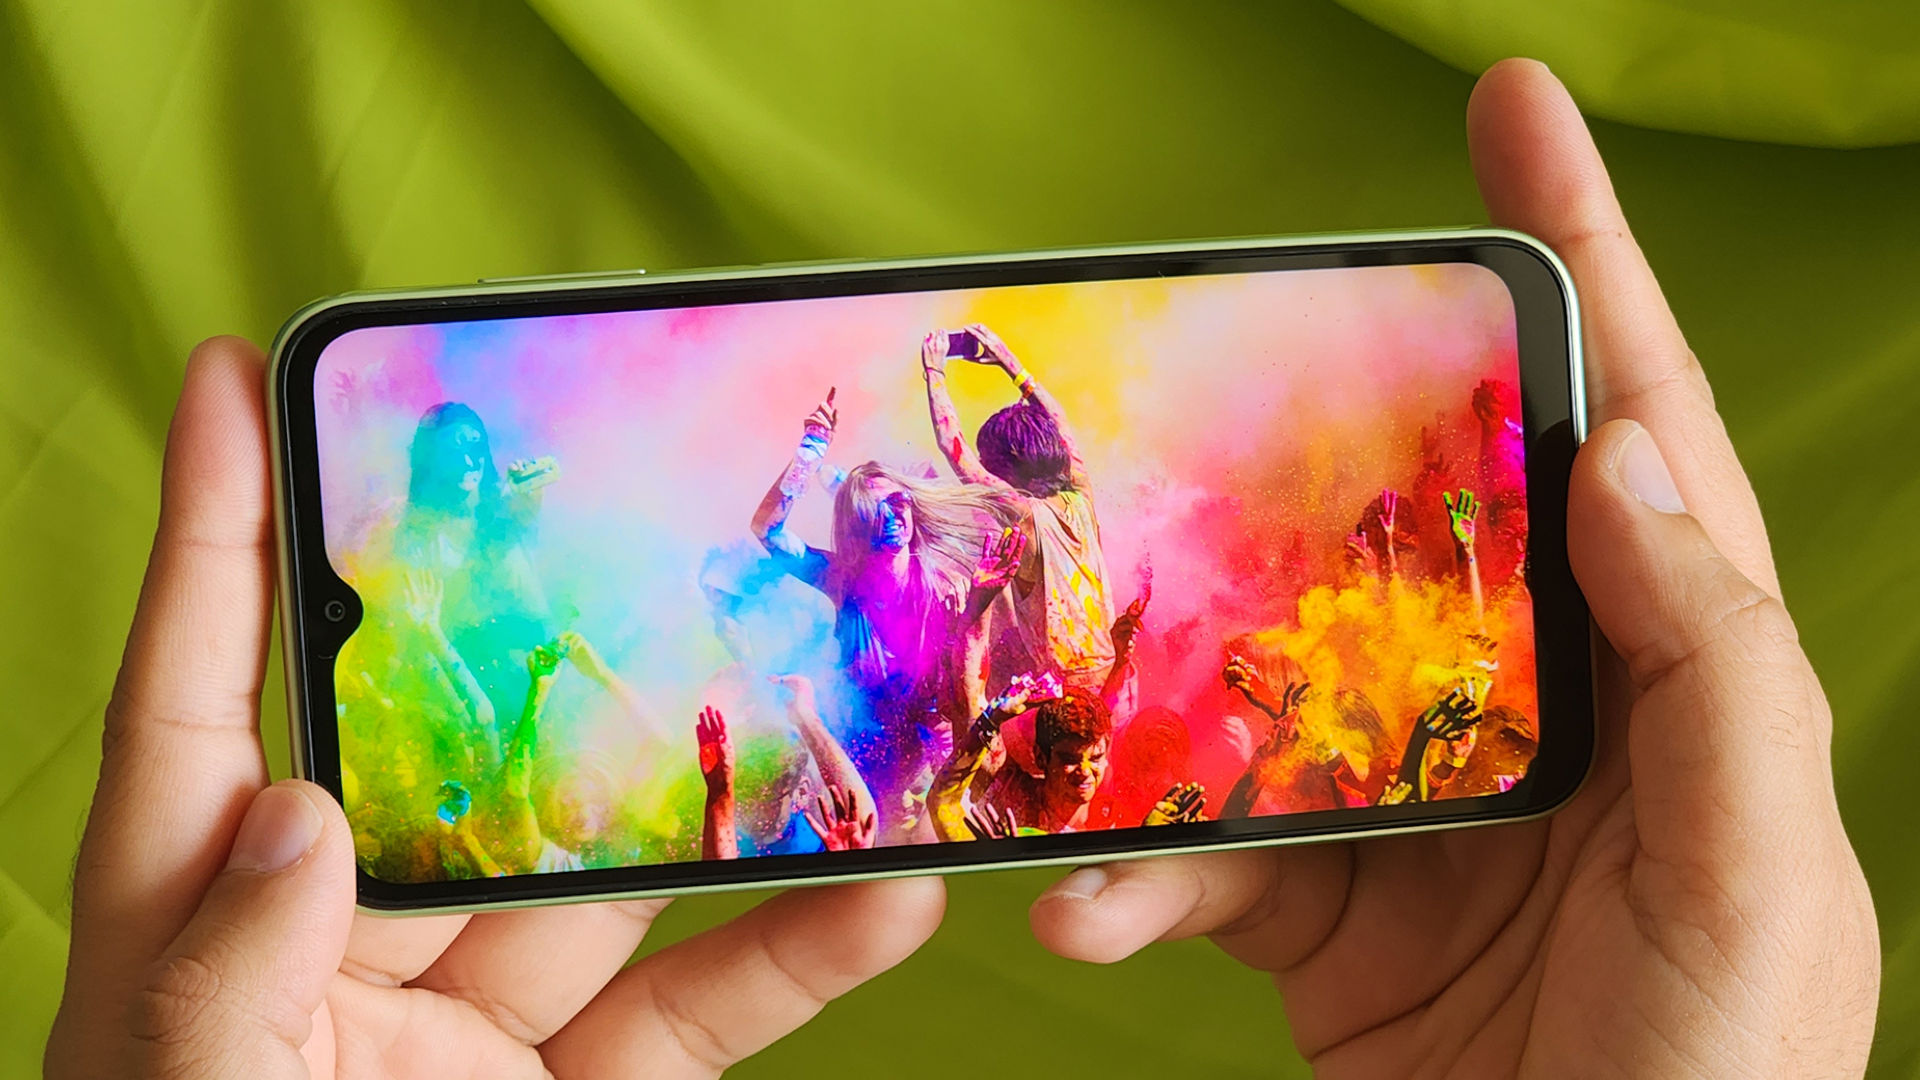 Samsung Galaxy A14 5G Review